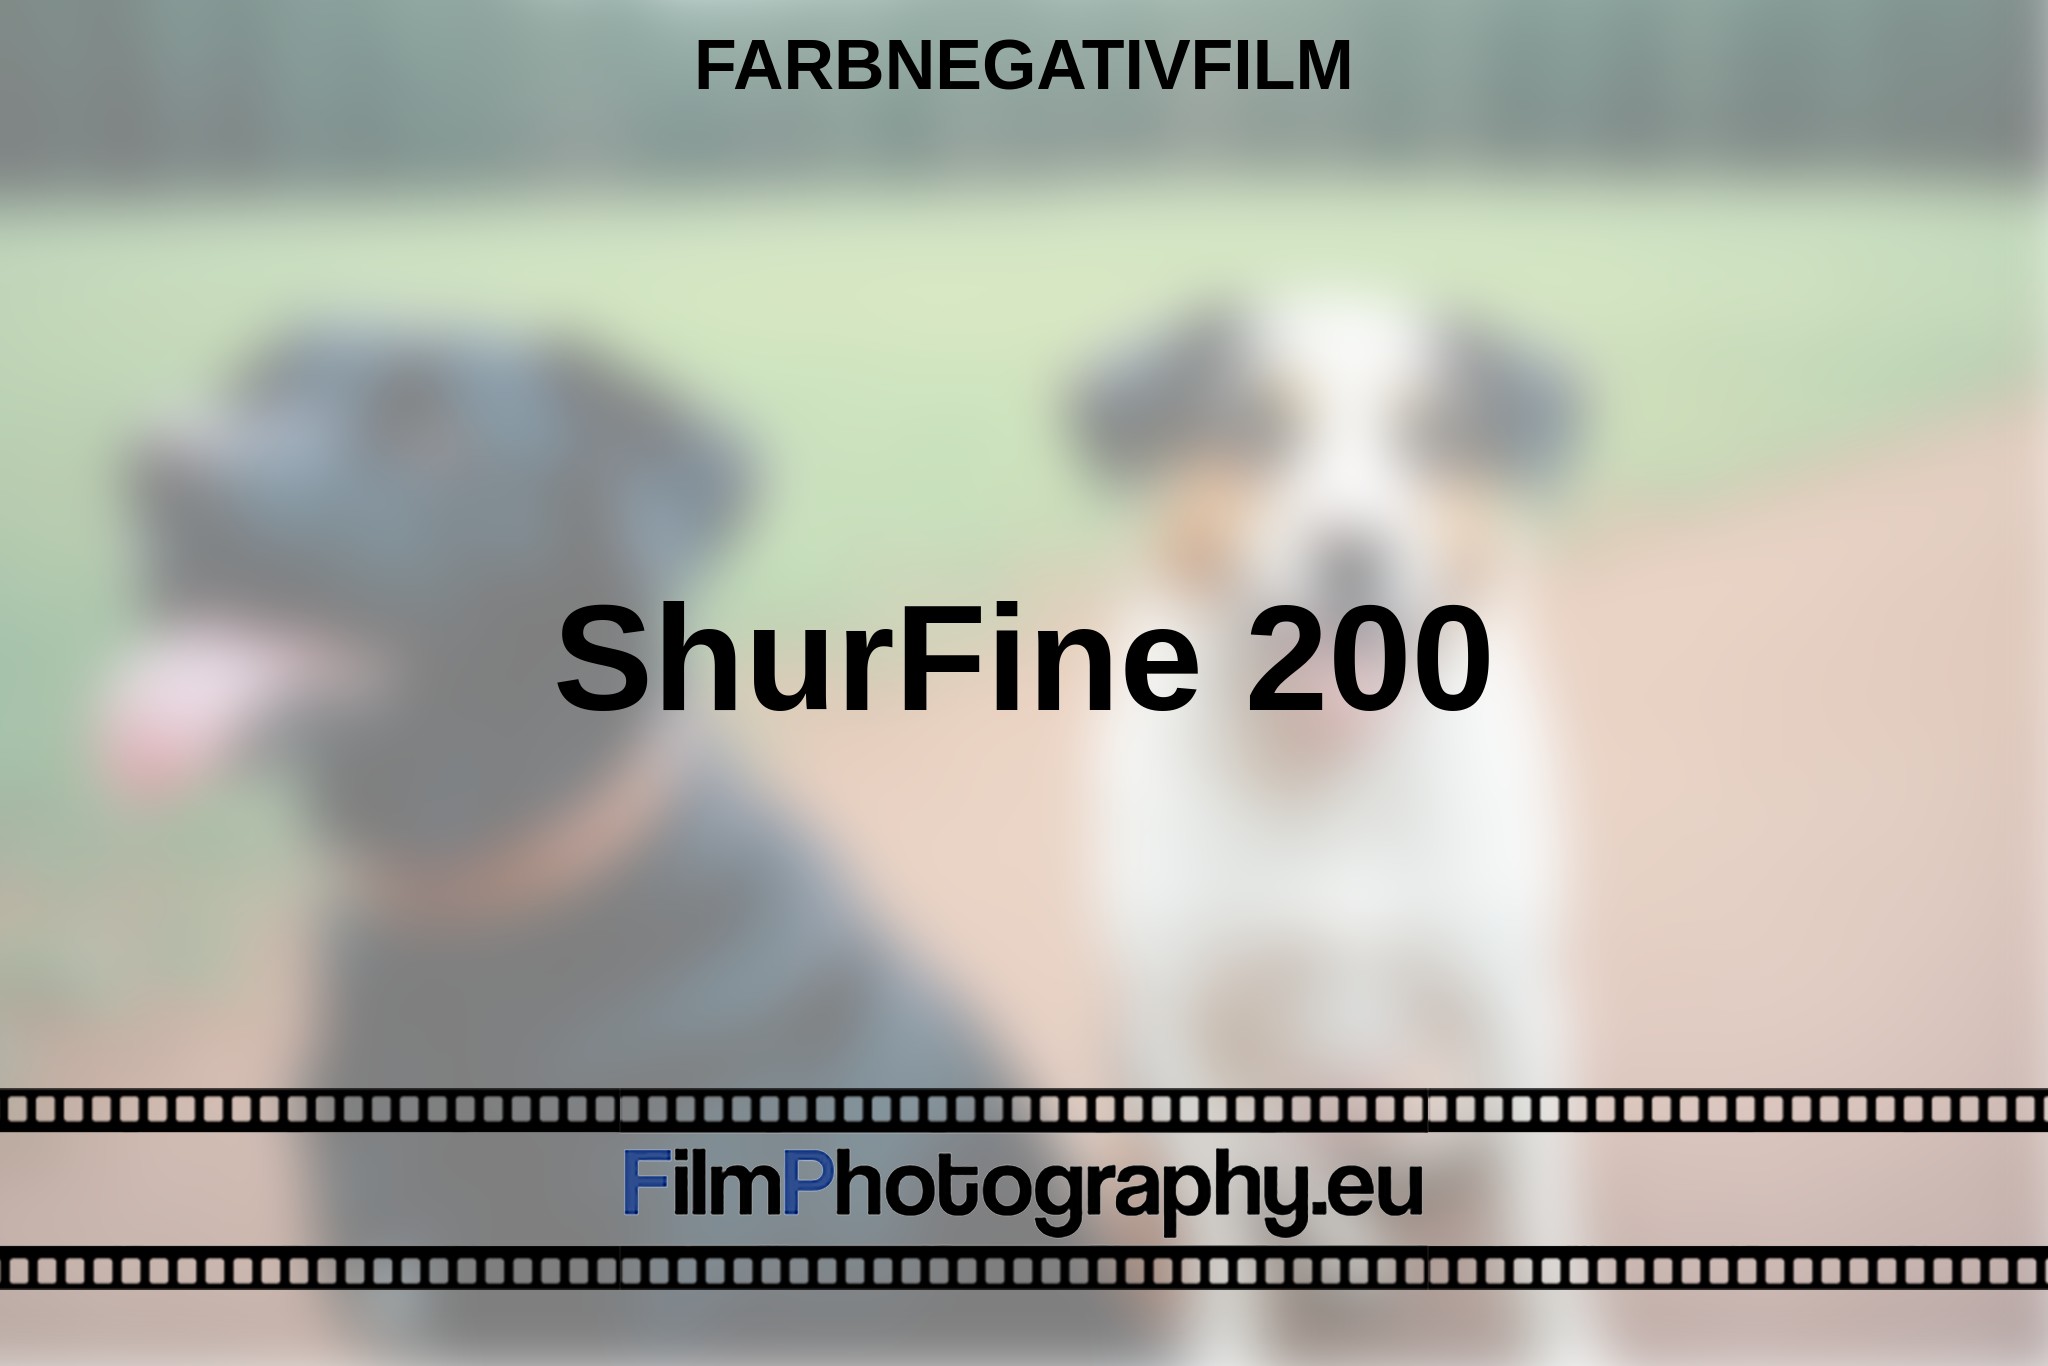 shurfine-200-farbnegativfilm-bnv.jpg